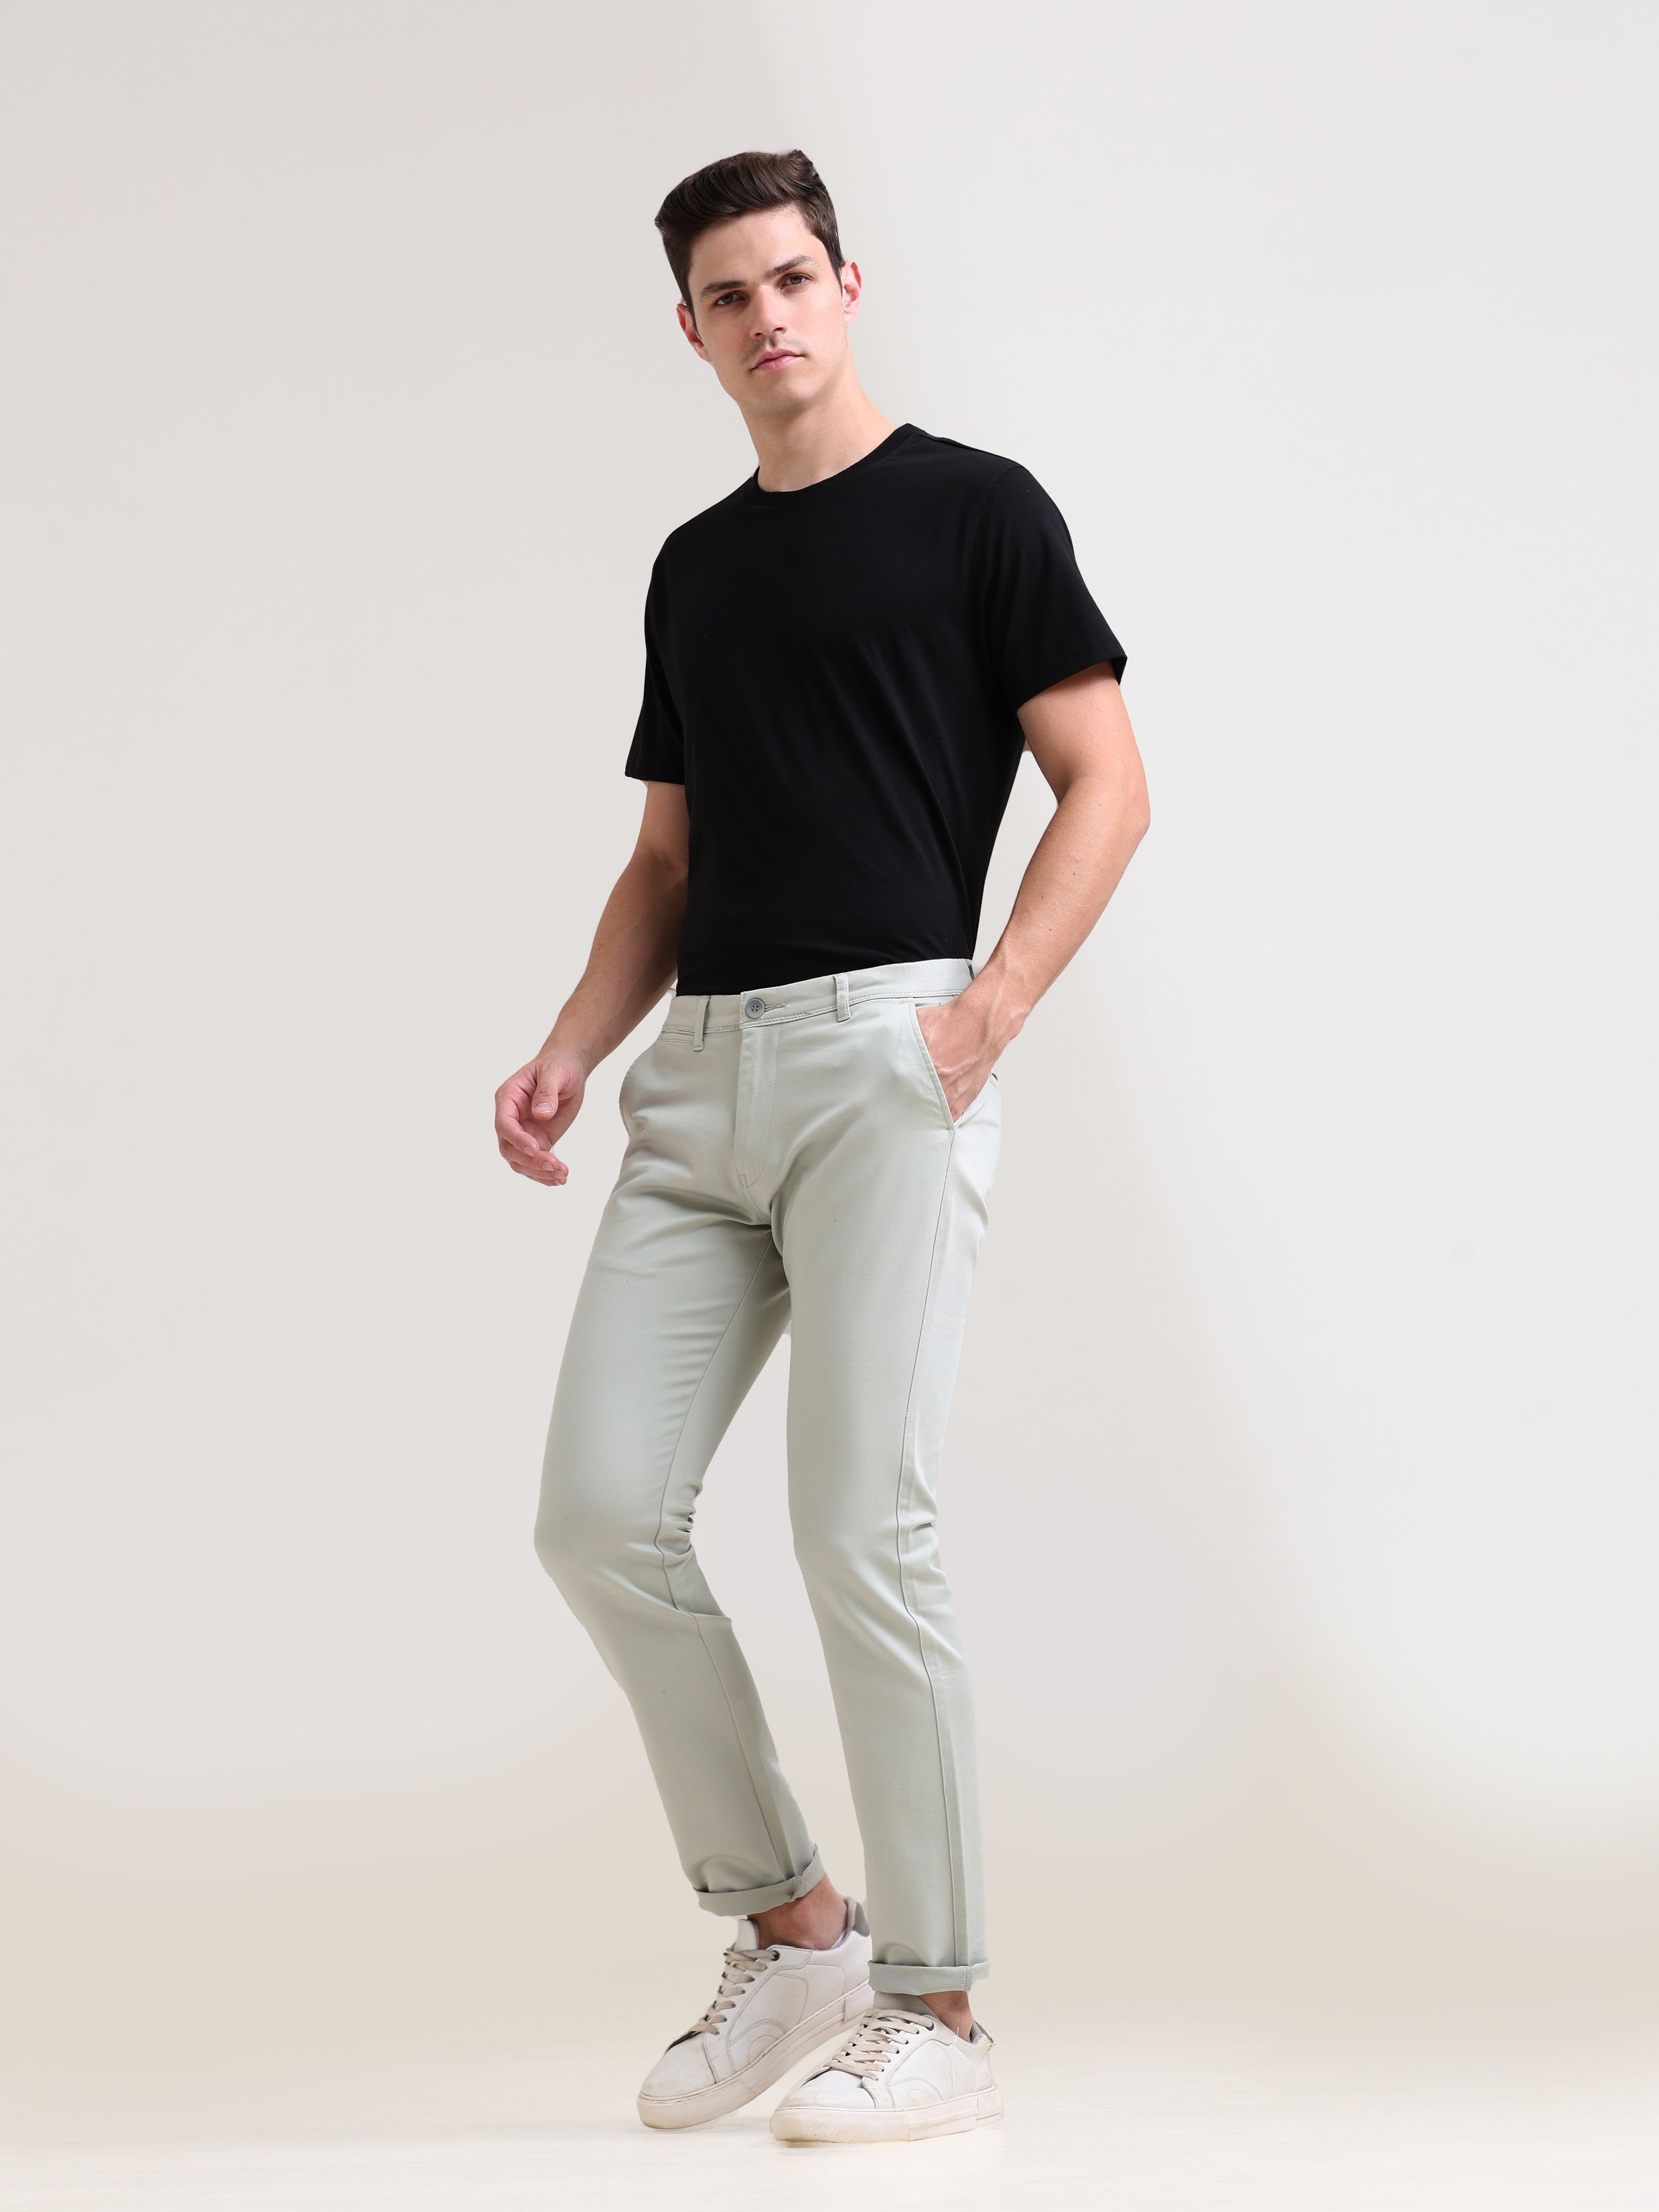 Pisa Green : Cotton Comfort Fit Pants